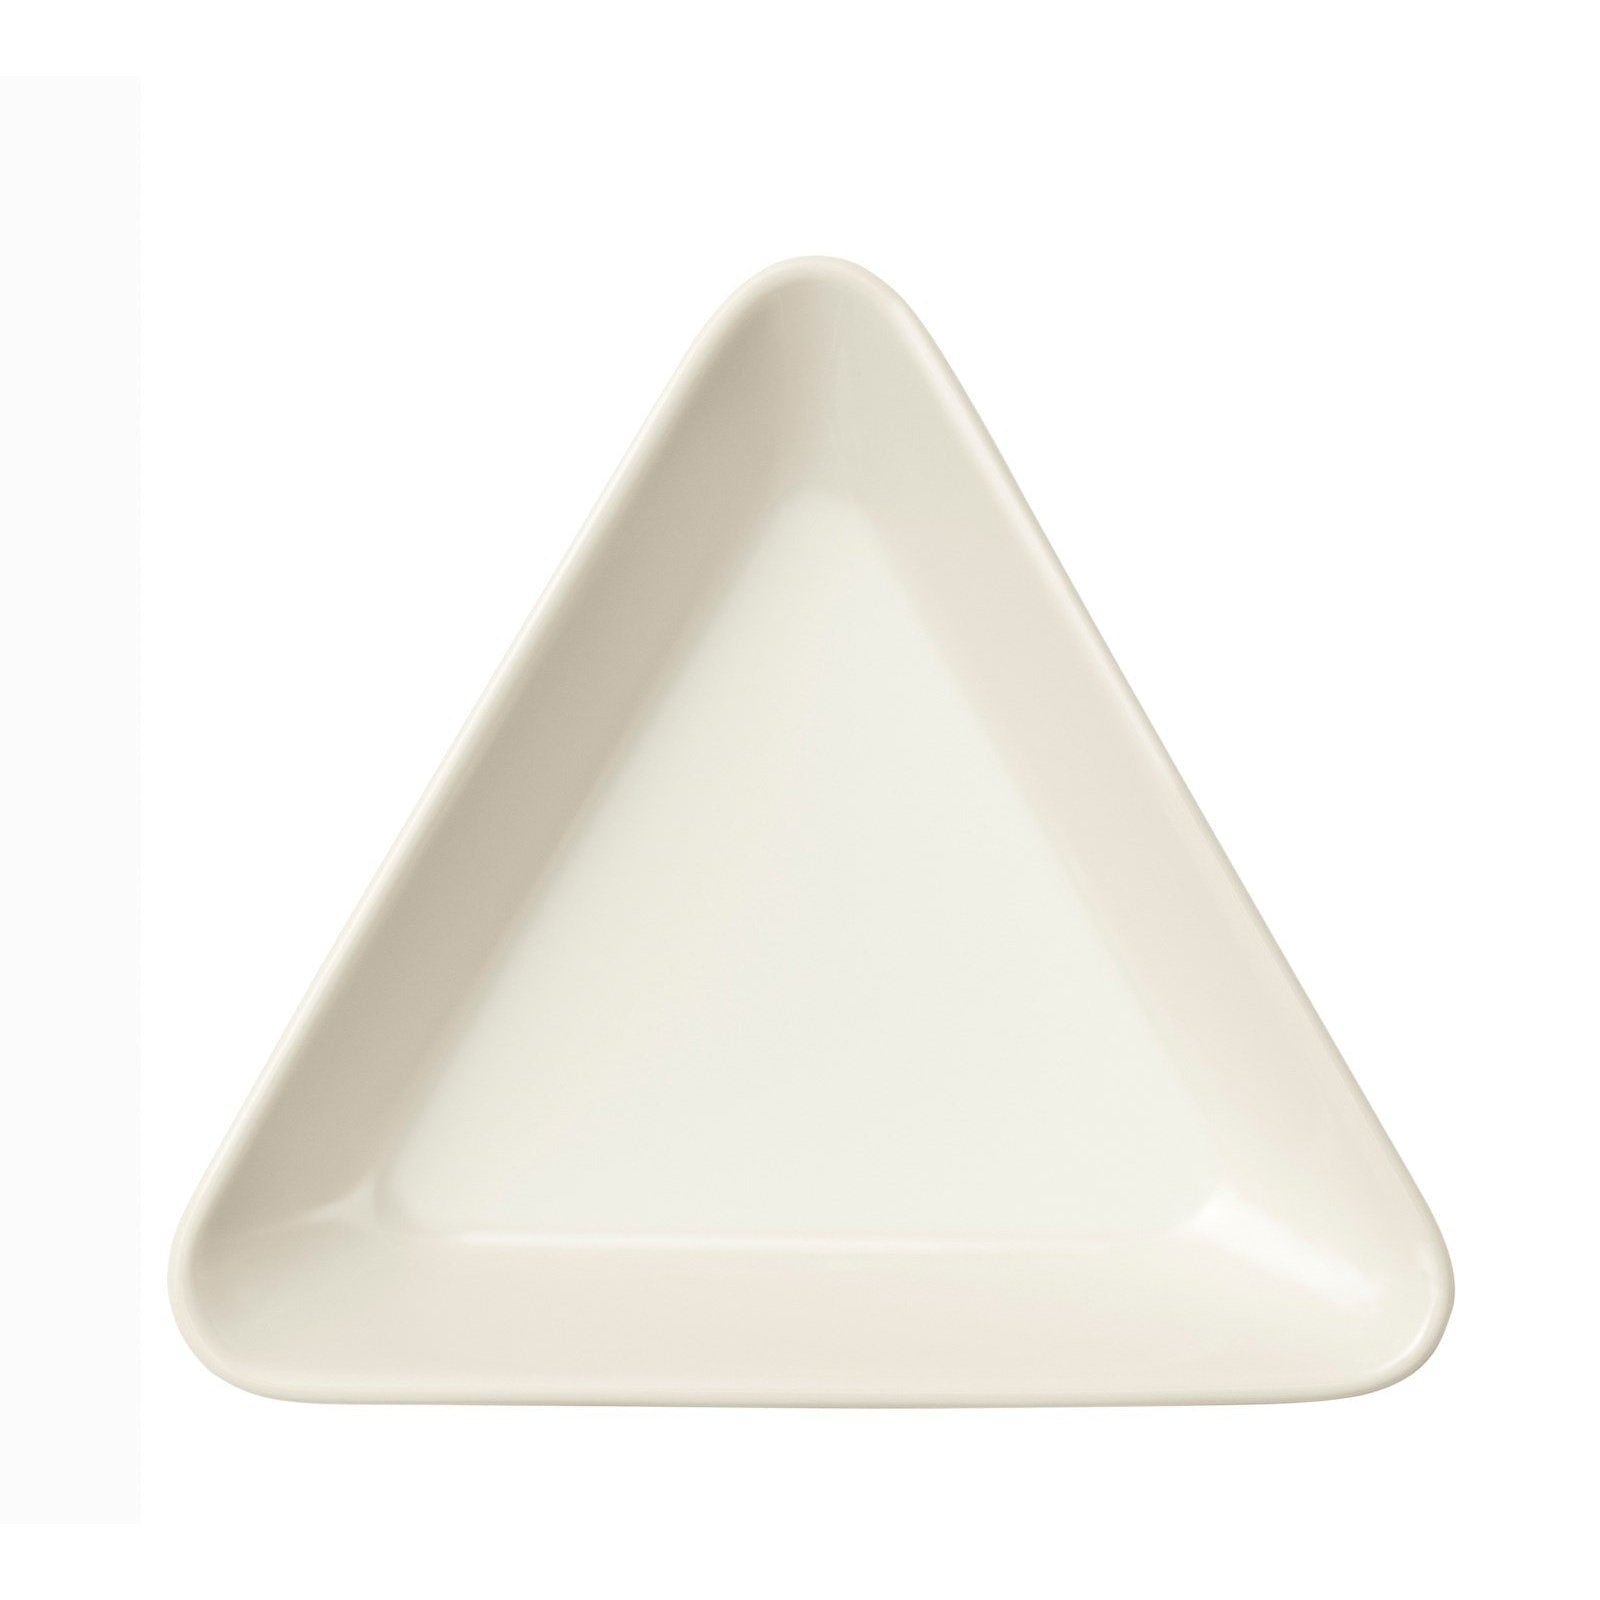 Iittala Teema Bowl White, Triangular